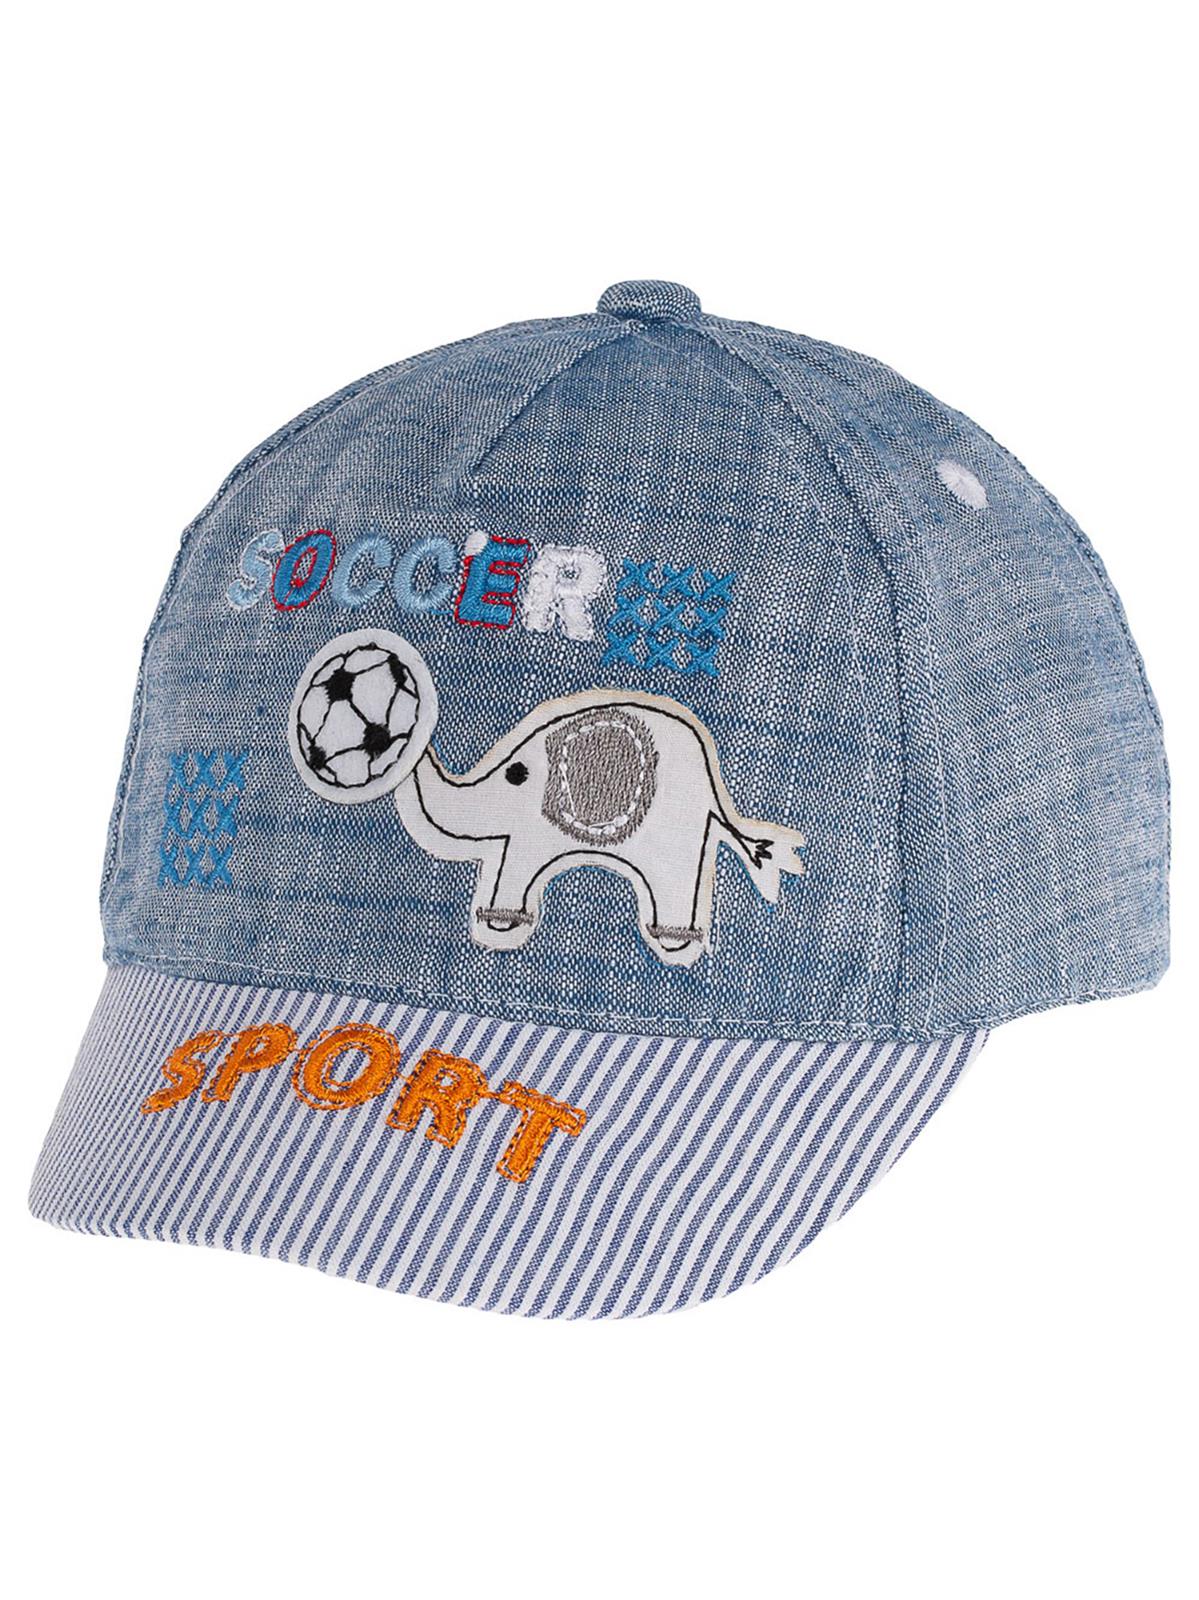 Kitti Erkek Bebek Kep Şapka 0-18 Ay Koyu Mavi